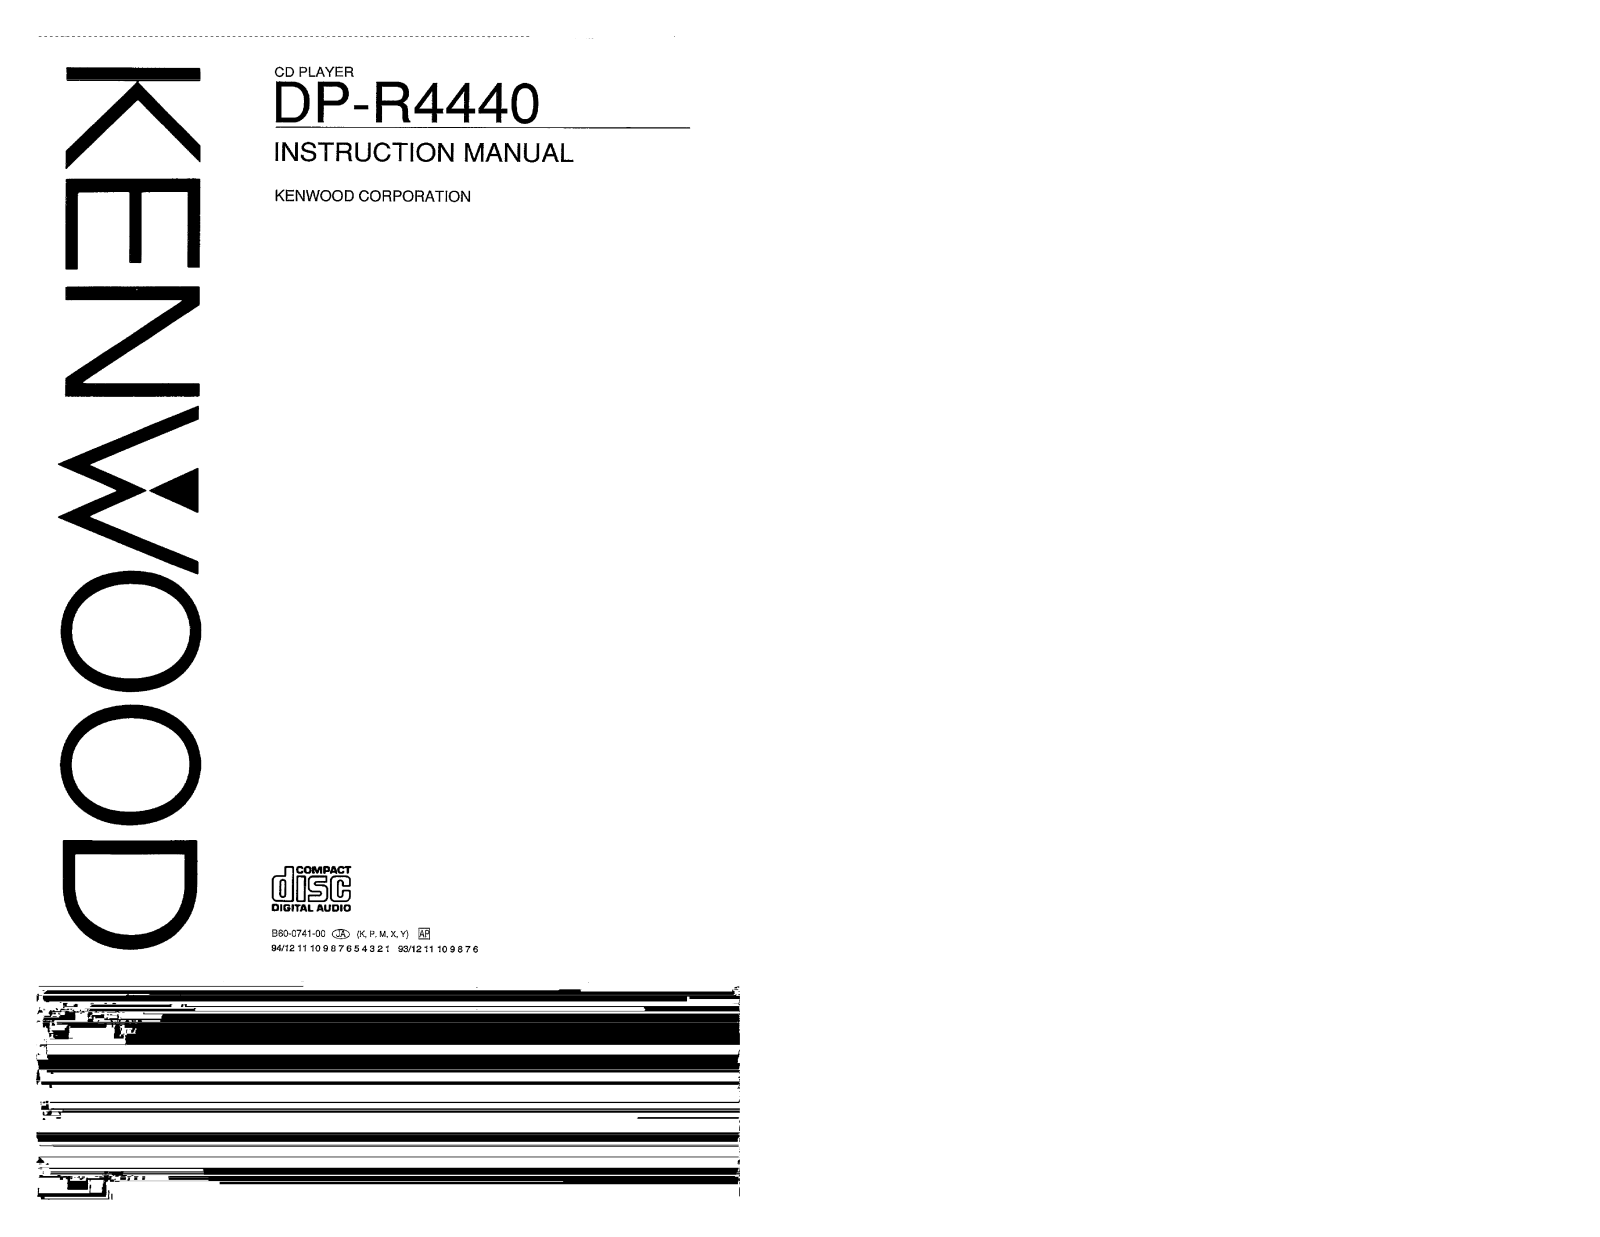 Kenwood DP-R4440 User Manual